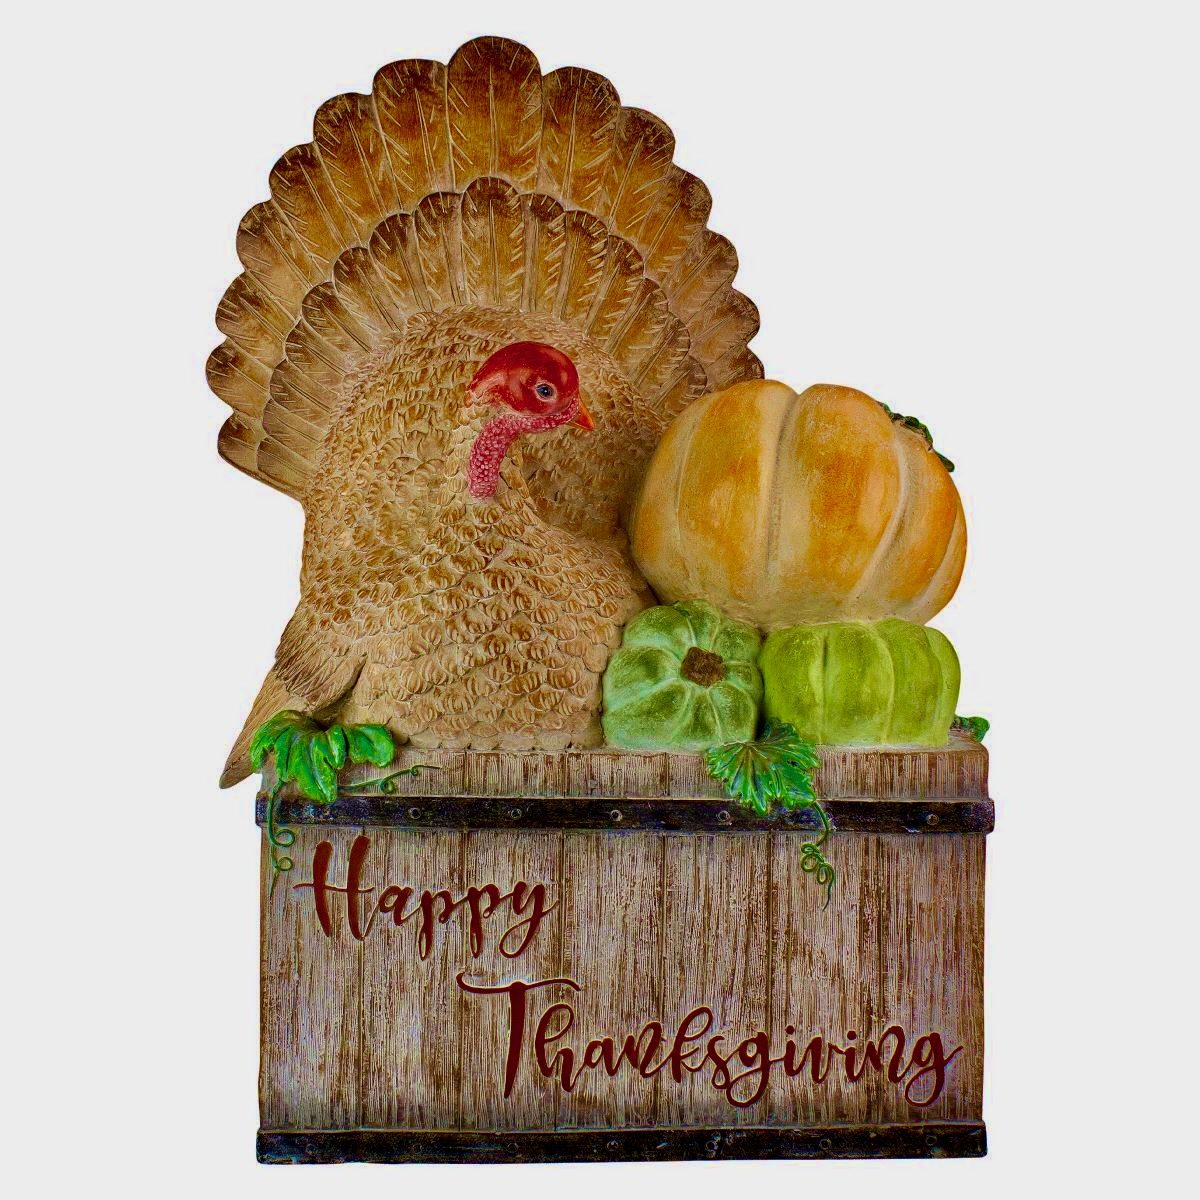 Thanksgiving turkey and pumpkins centerpiece.